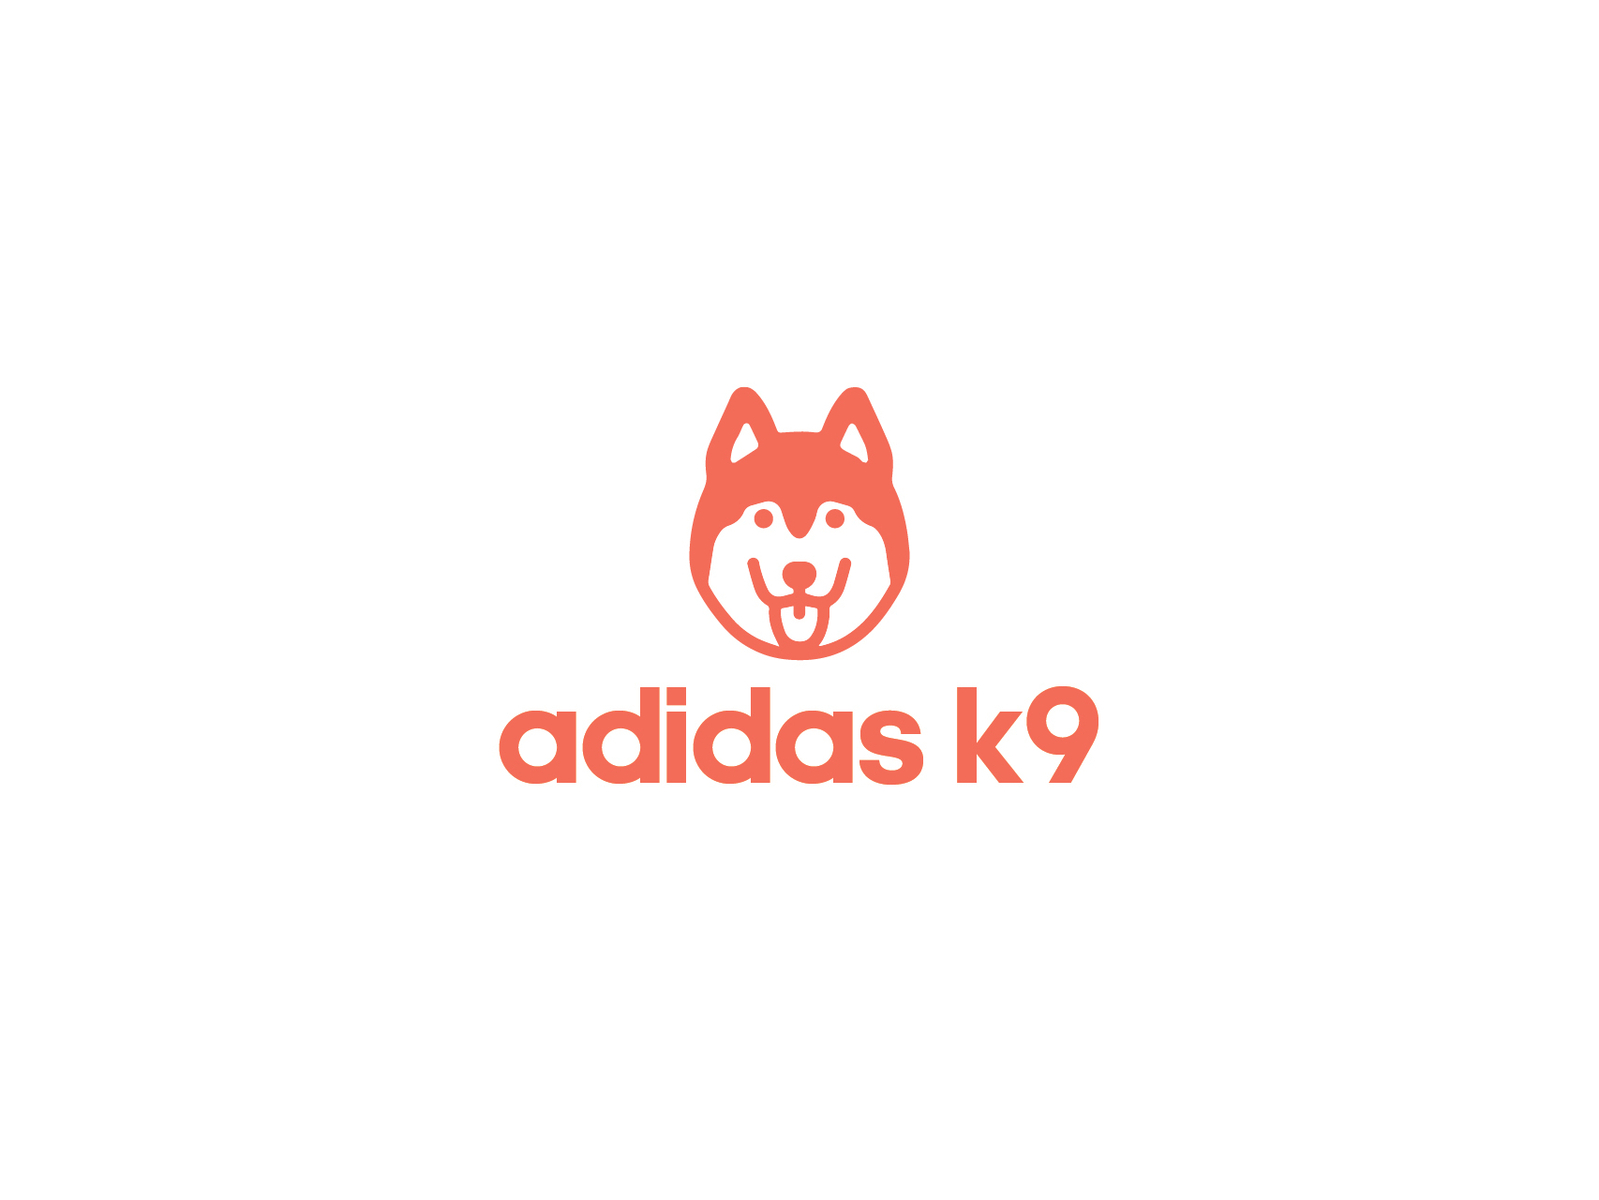 adidas k9